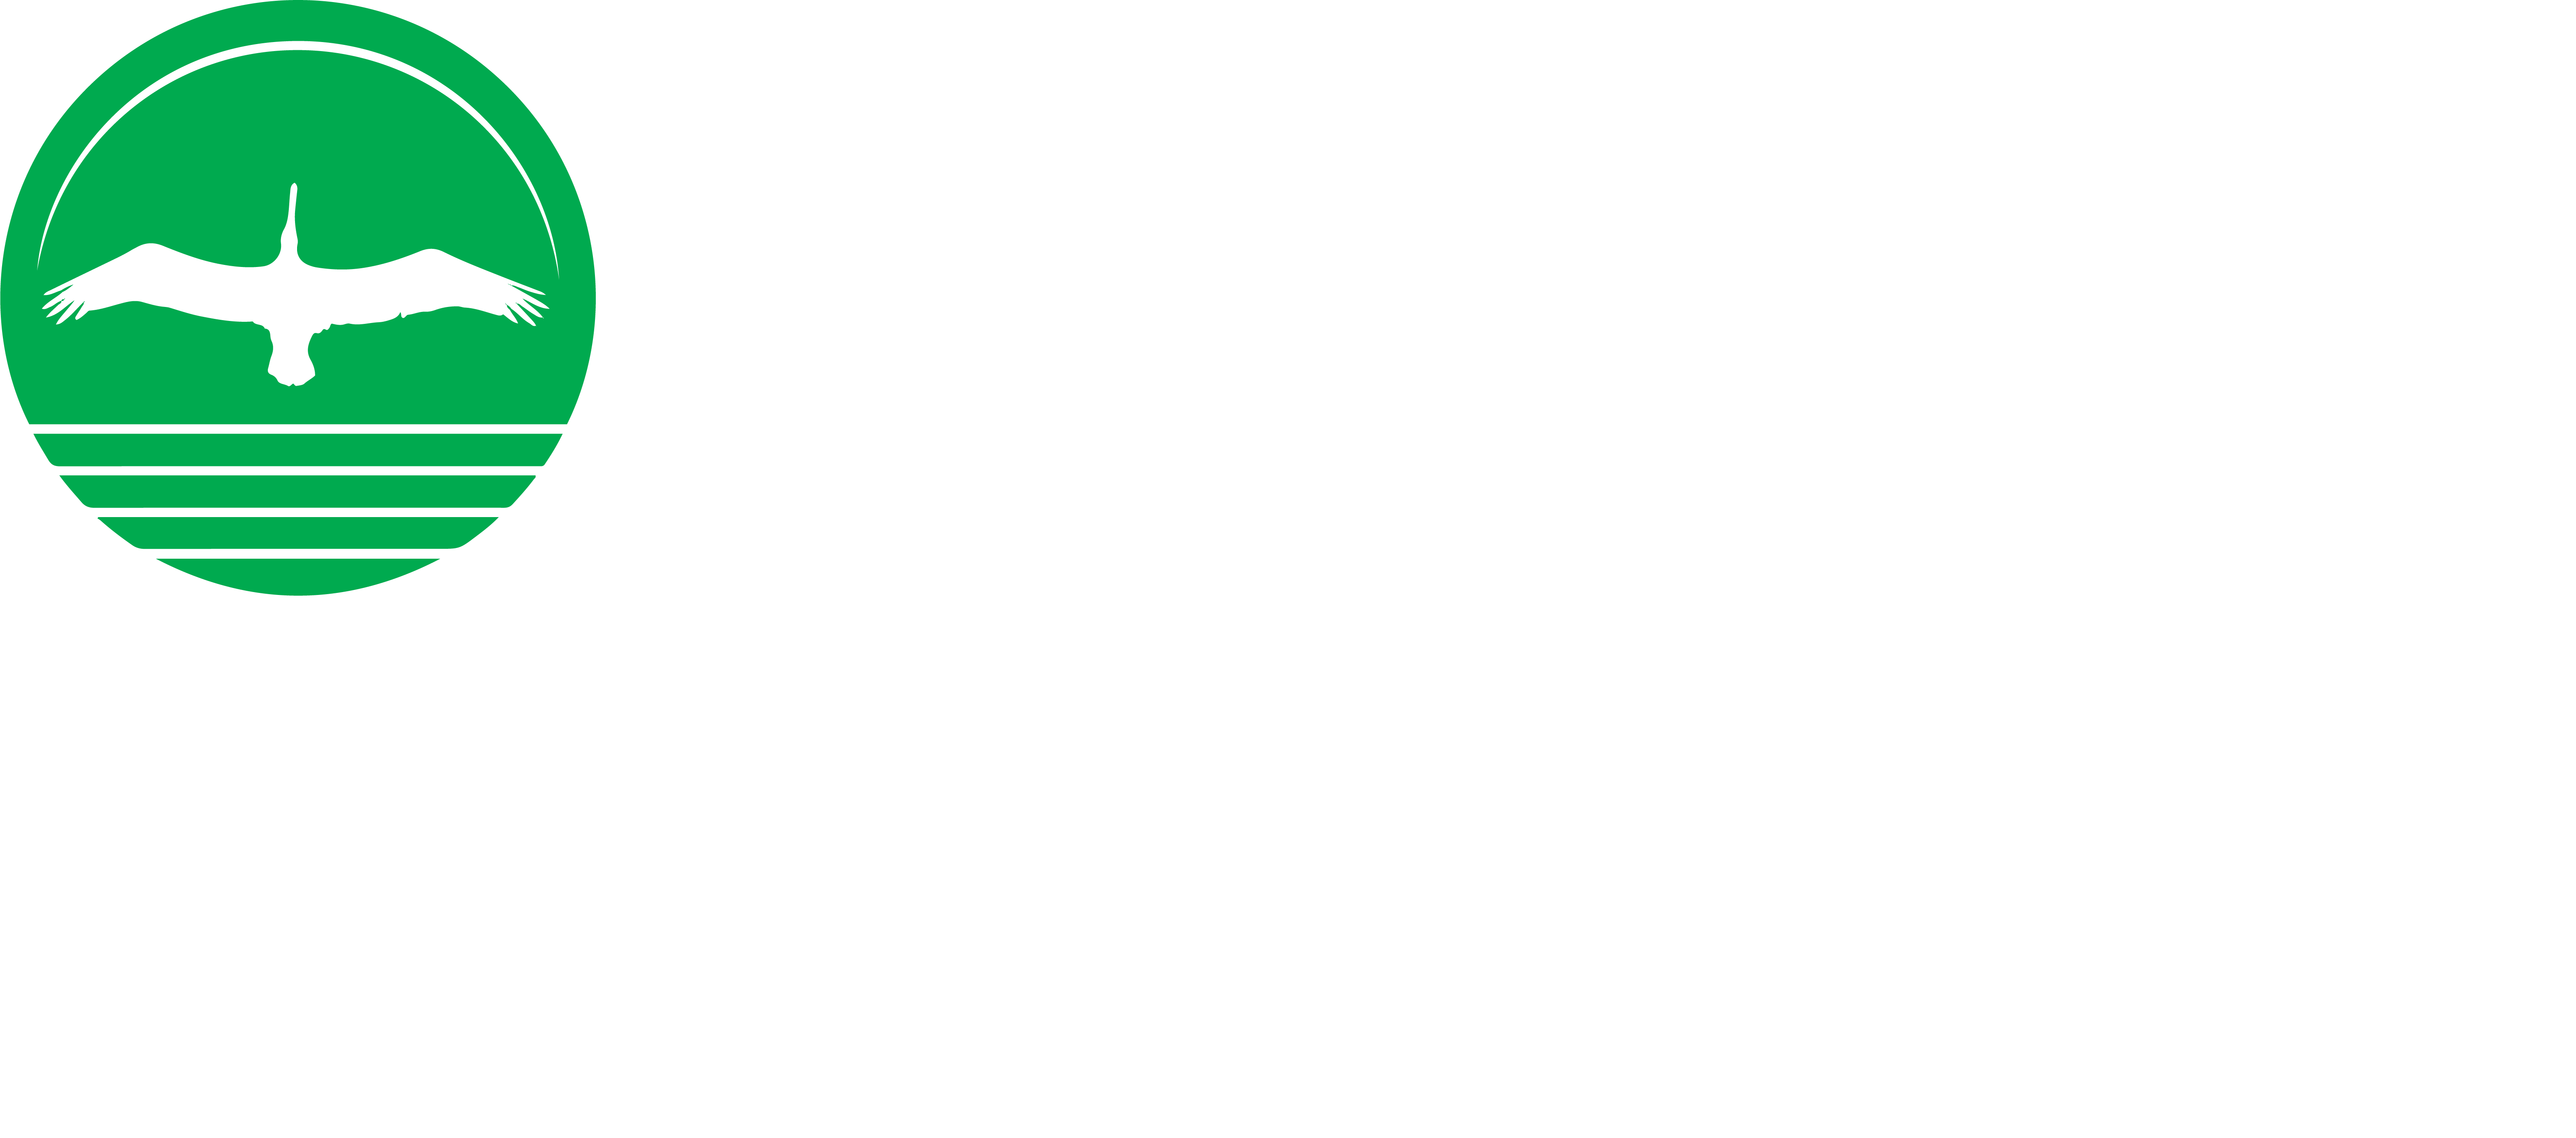 CCNB Amphitheatre logo